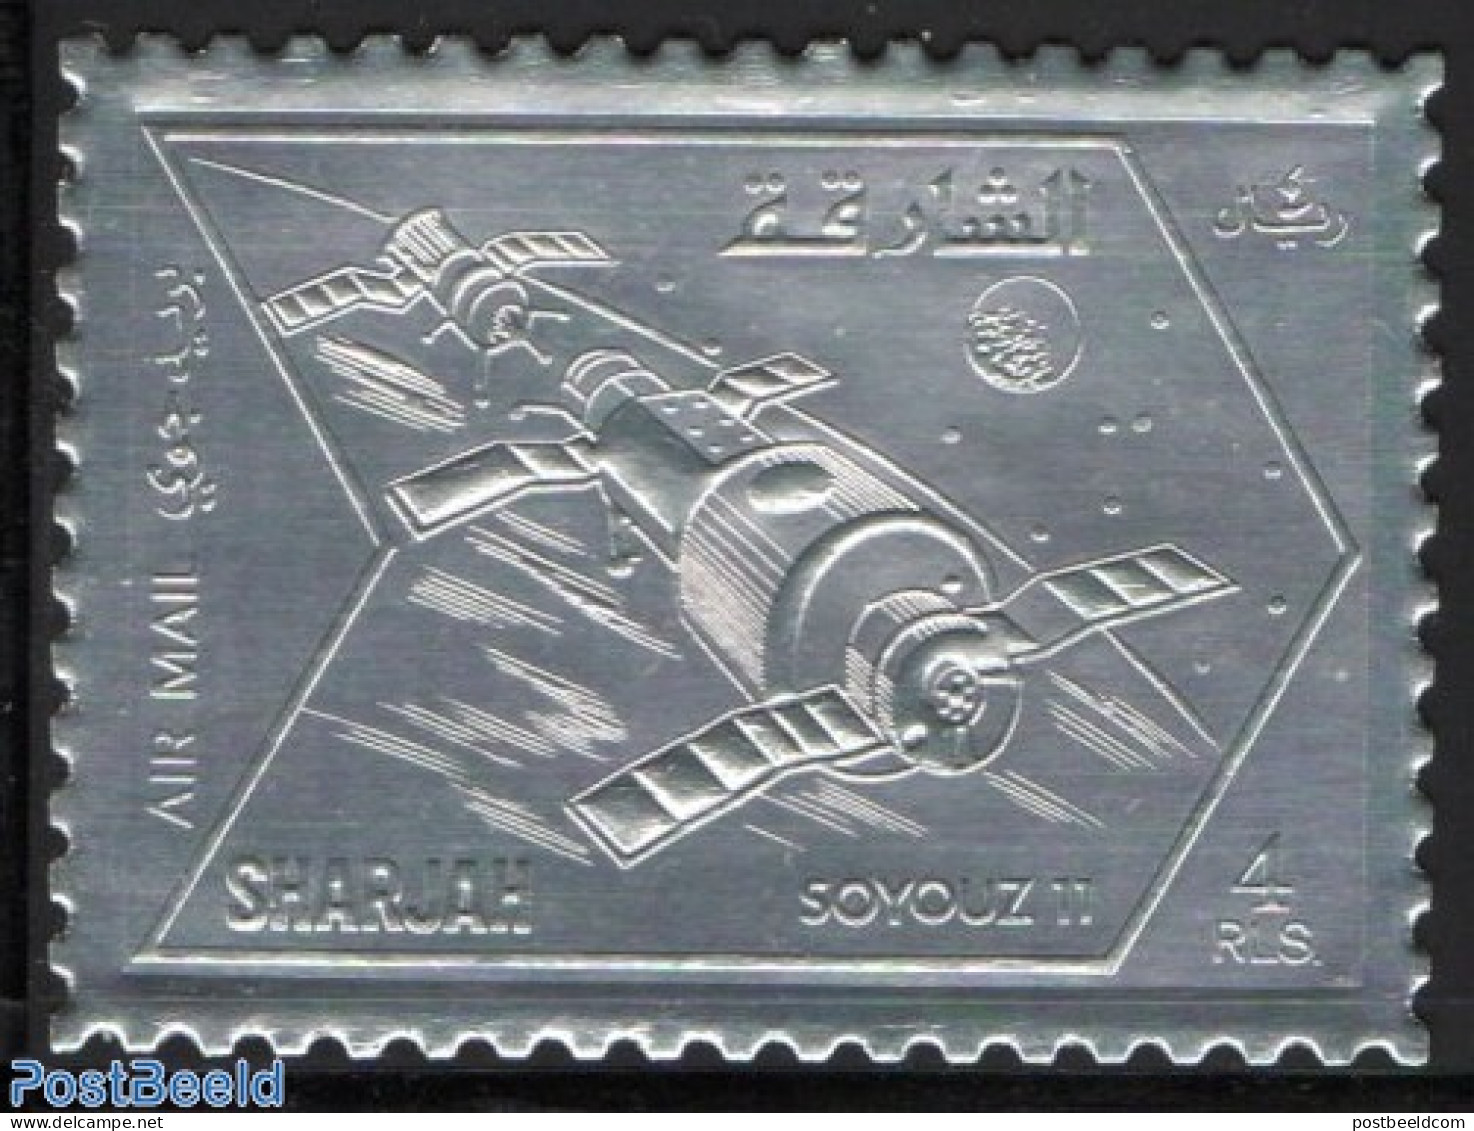 Sharjah 1972 Soyuz II 1v Silver, Mint NH, Transport - Space Exploration - Sharjah